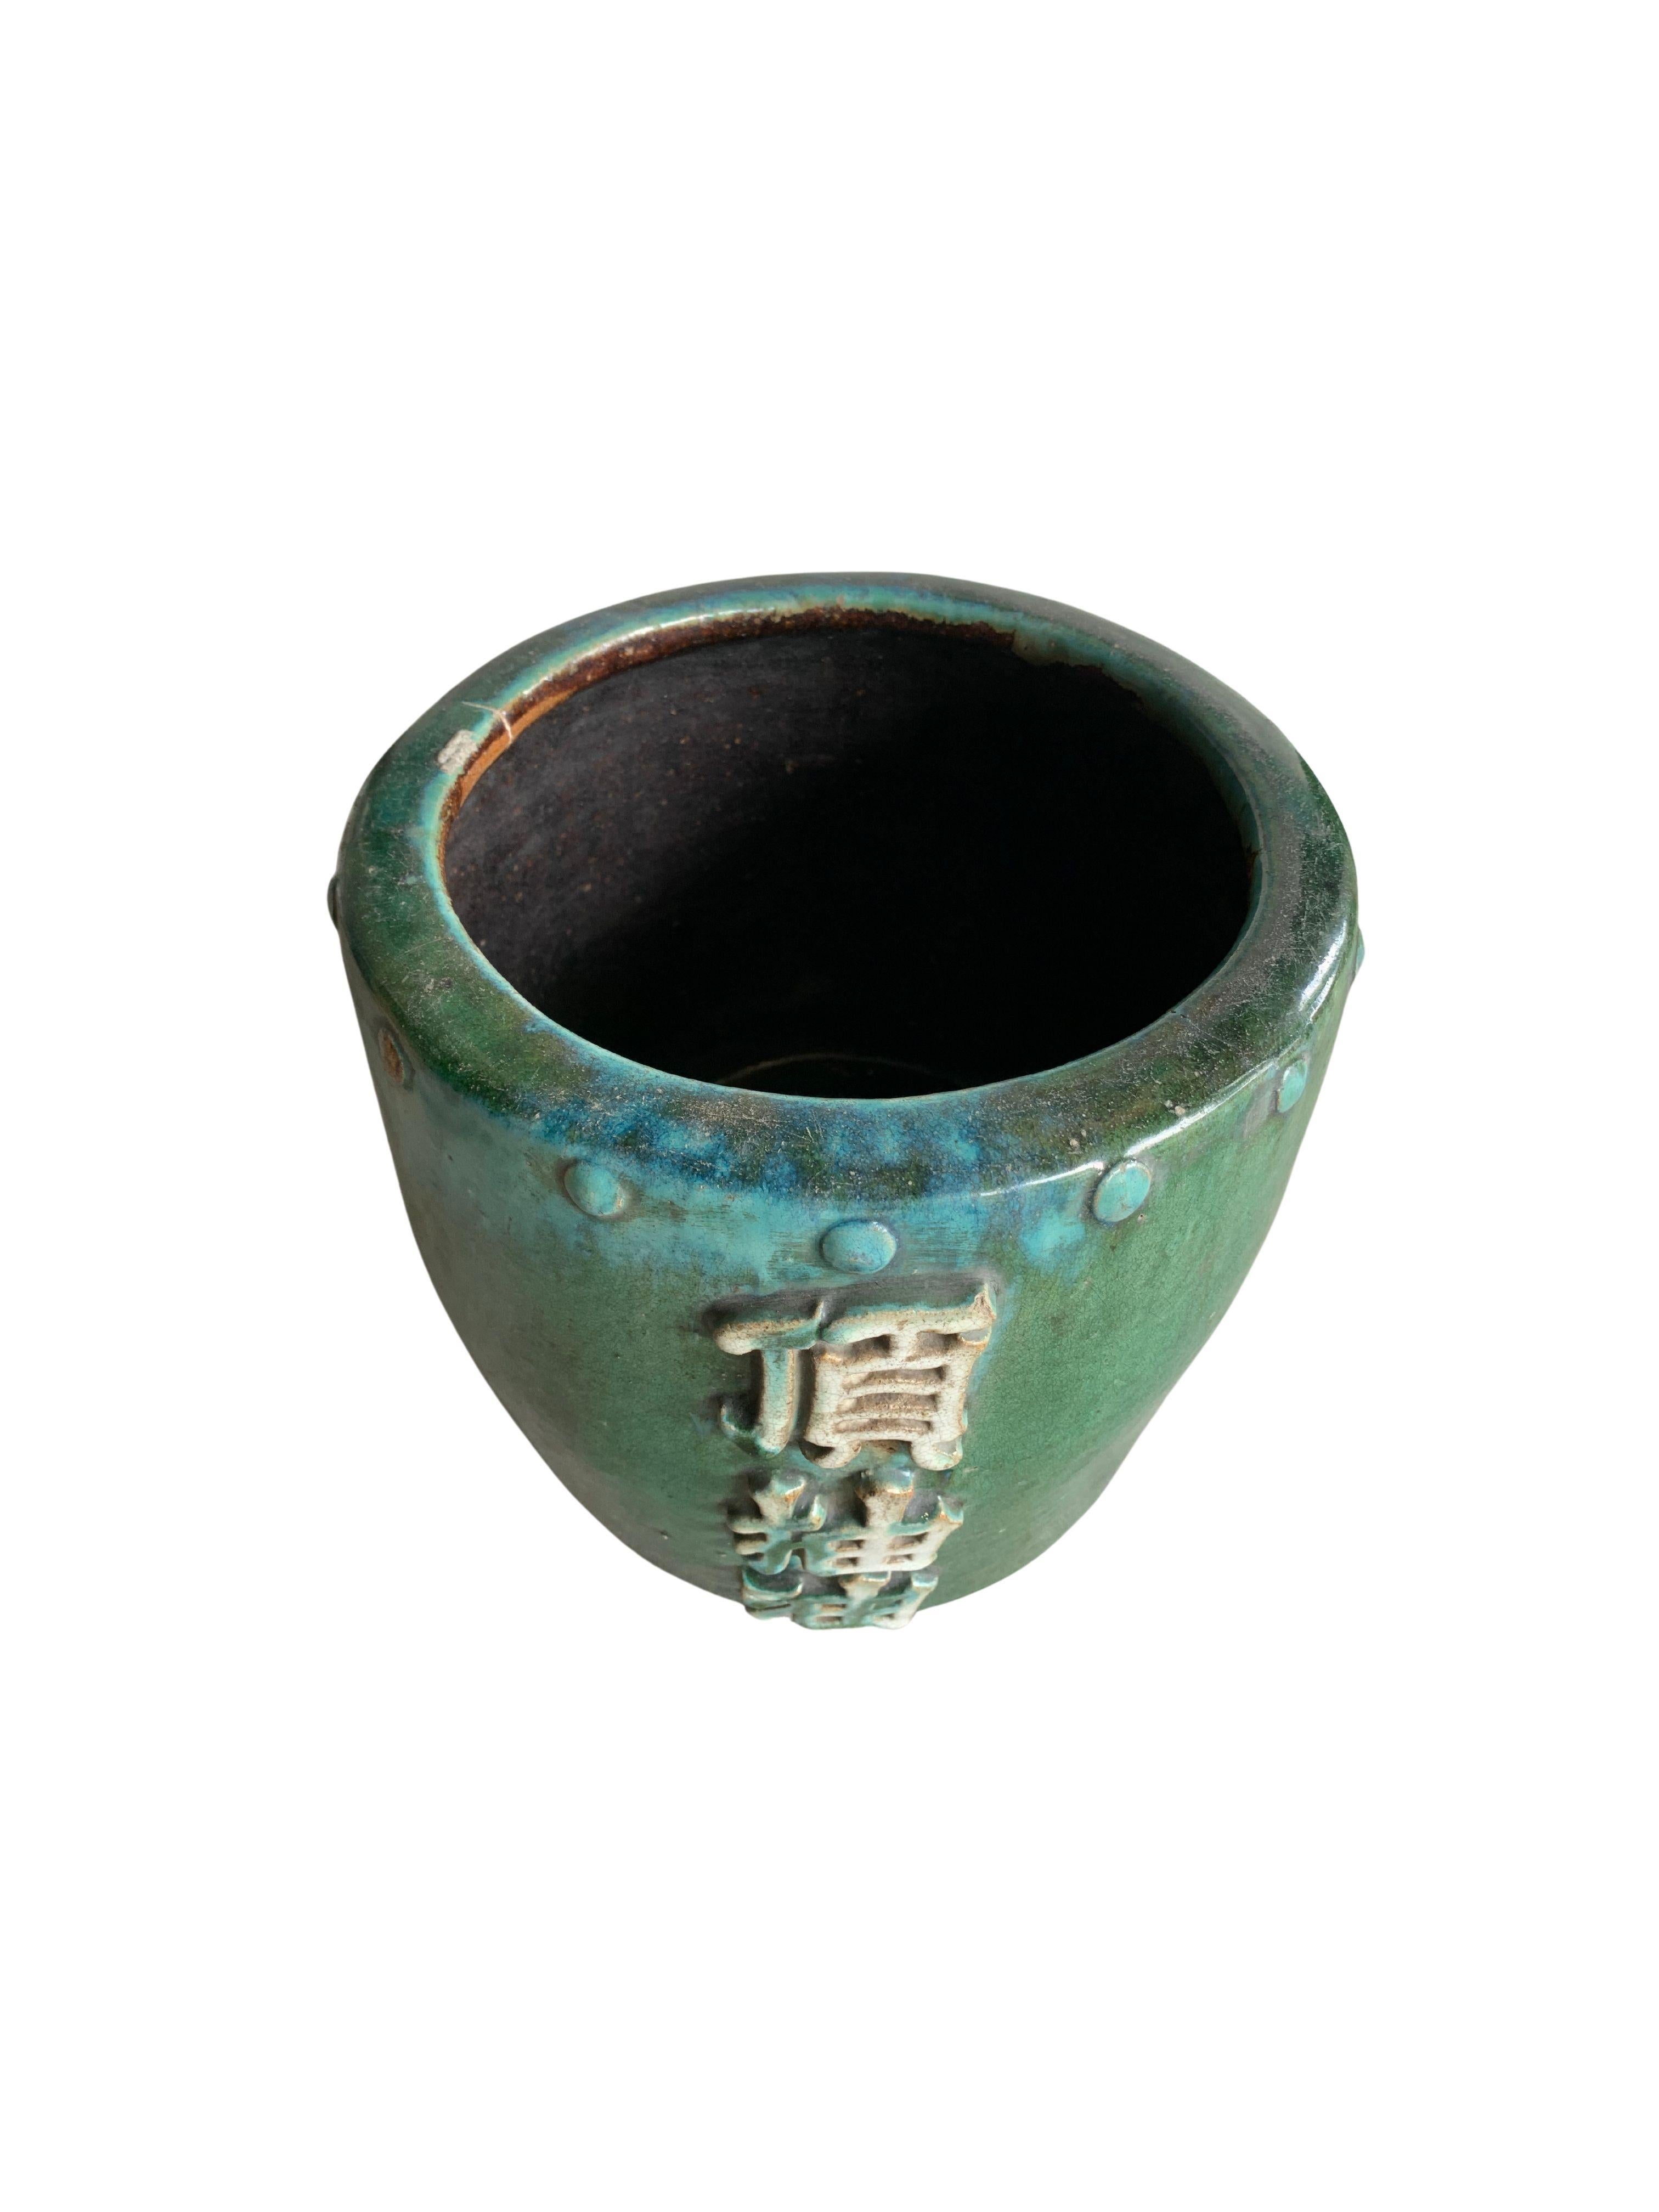 Chinese Green Glazed Ceramic Oil Storage Jar / Planter, c. 1950 For Sale 1